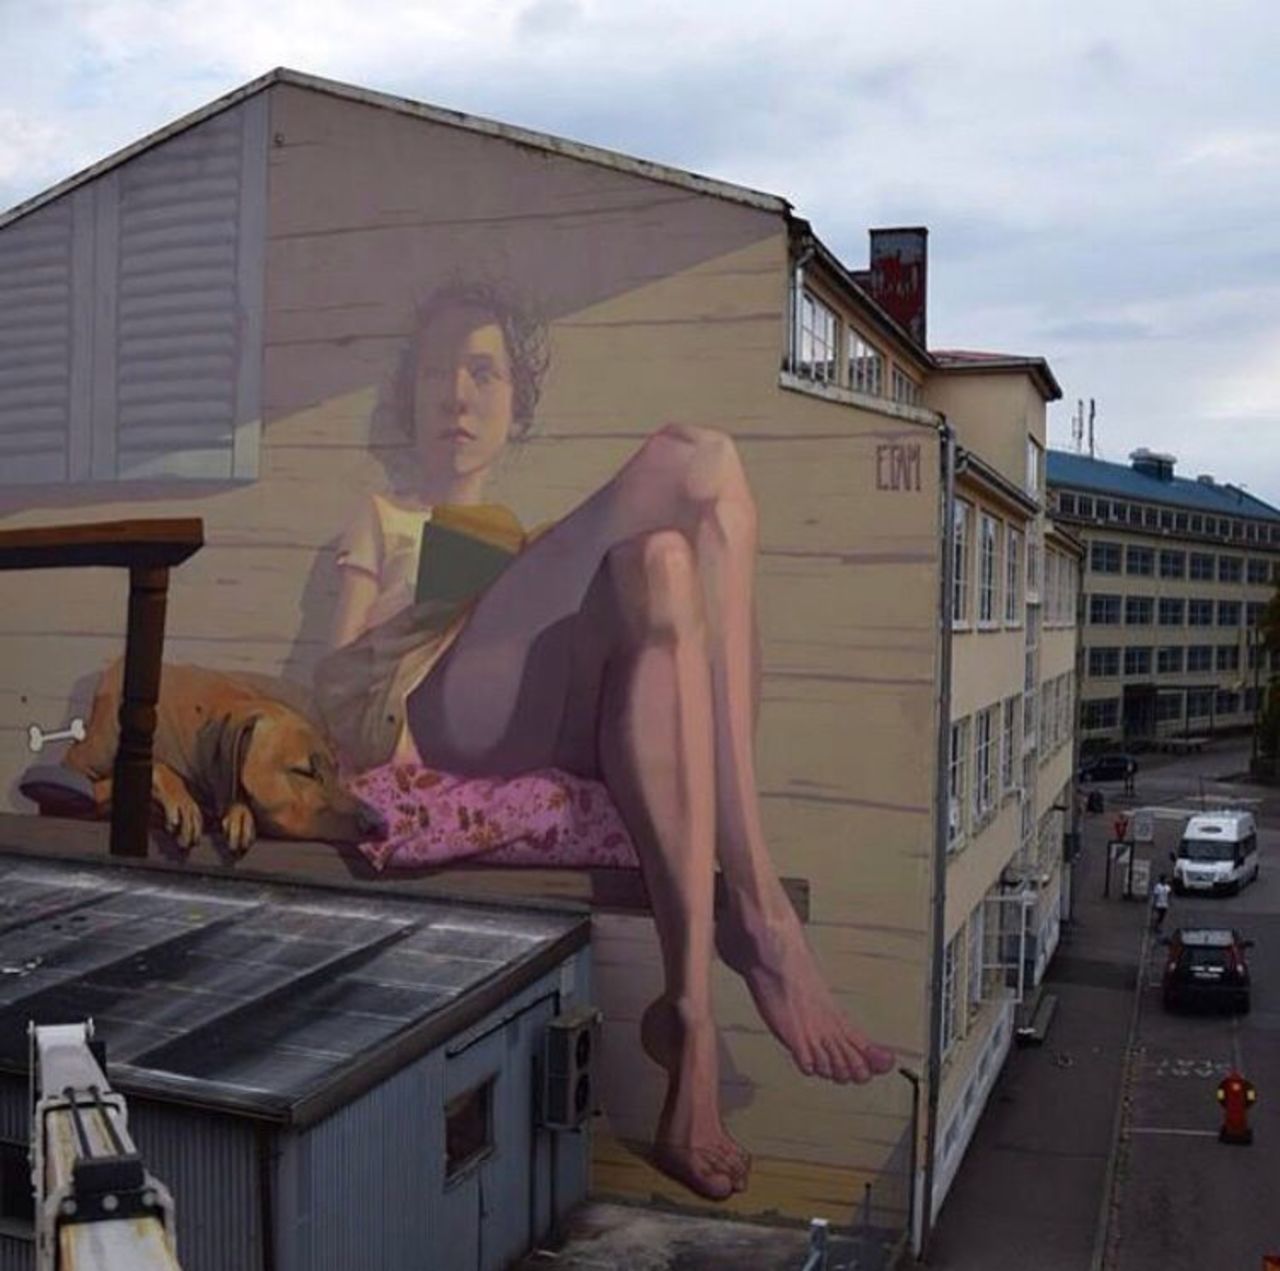 New work by ETAM CRU in Boras, Sweden #streetart #mural #graffiti #art https://t.co/J5wrVZmzzf